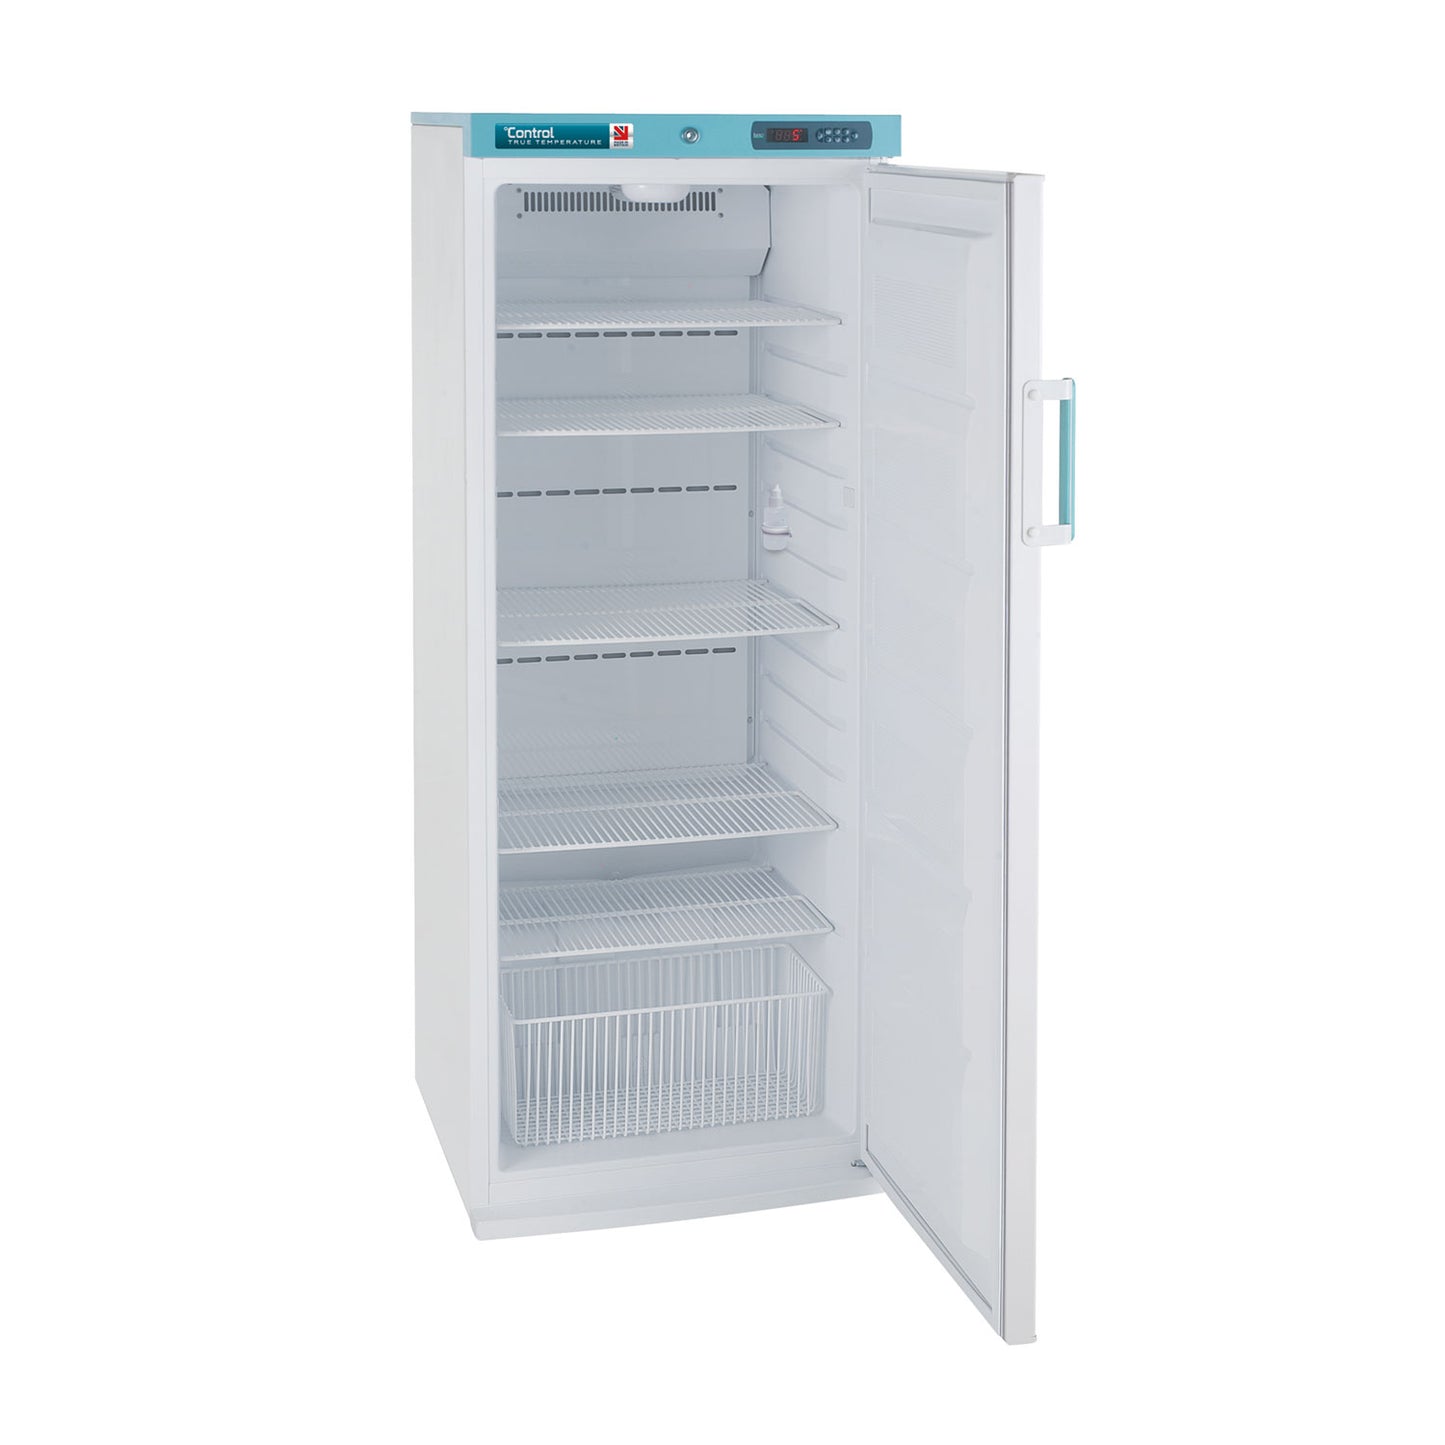 Lec PSRC273UK - 273L Pharmacy Refrigerator - Solid Door